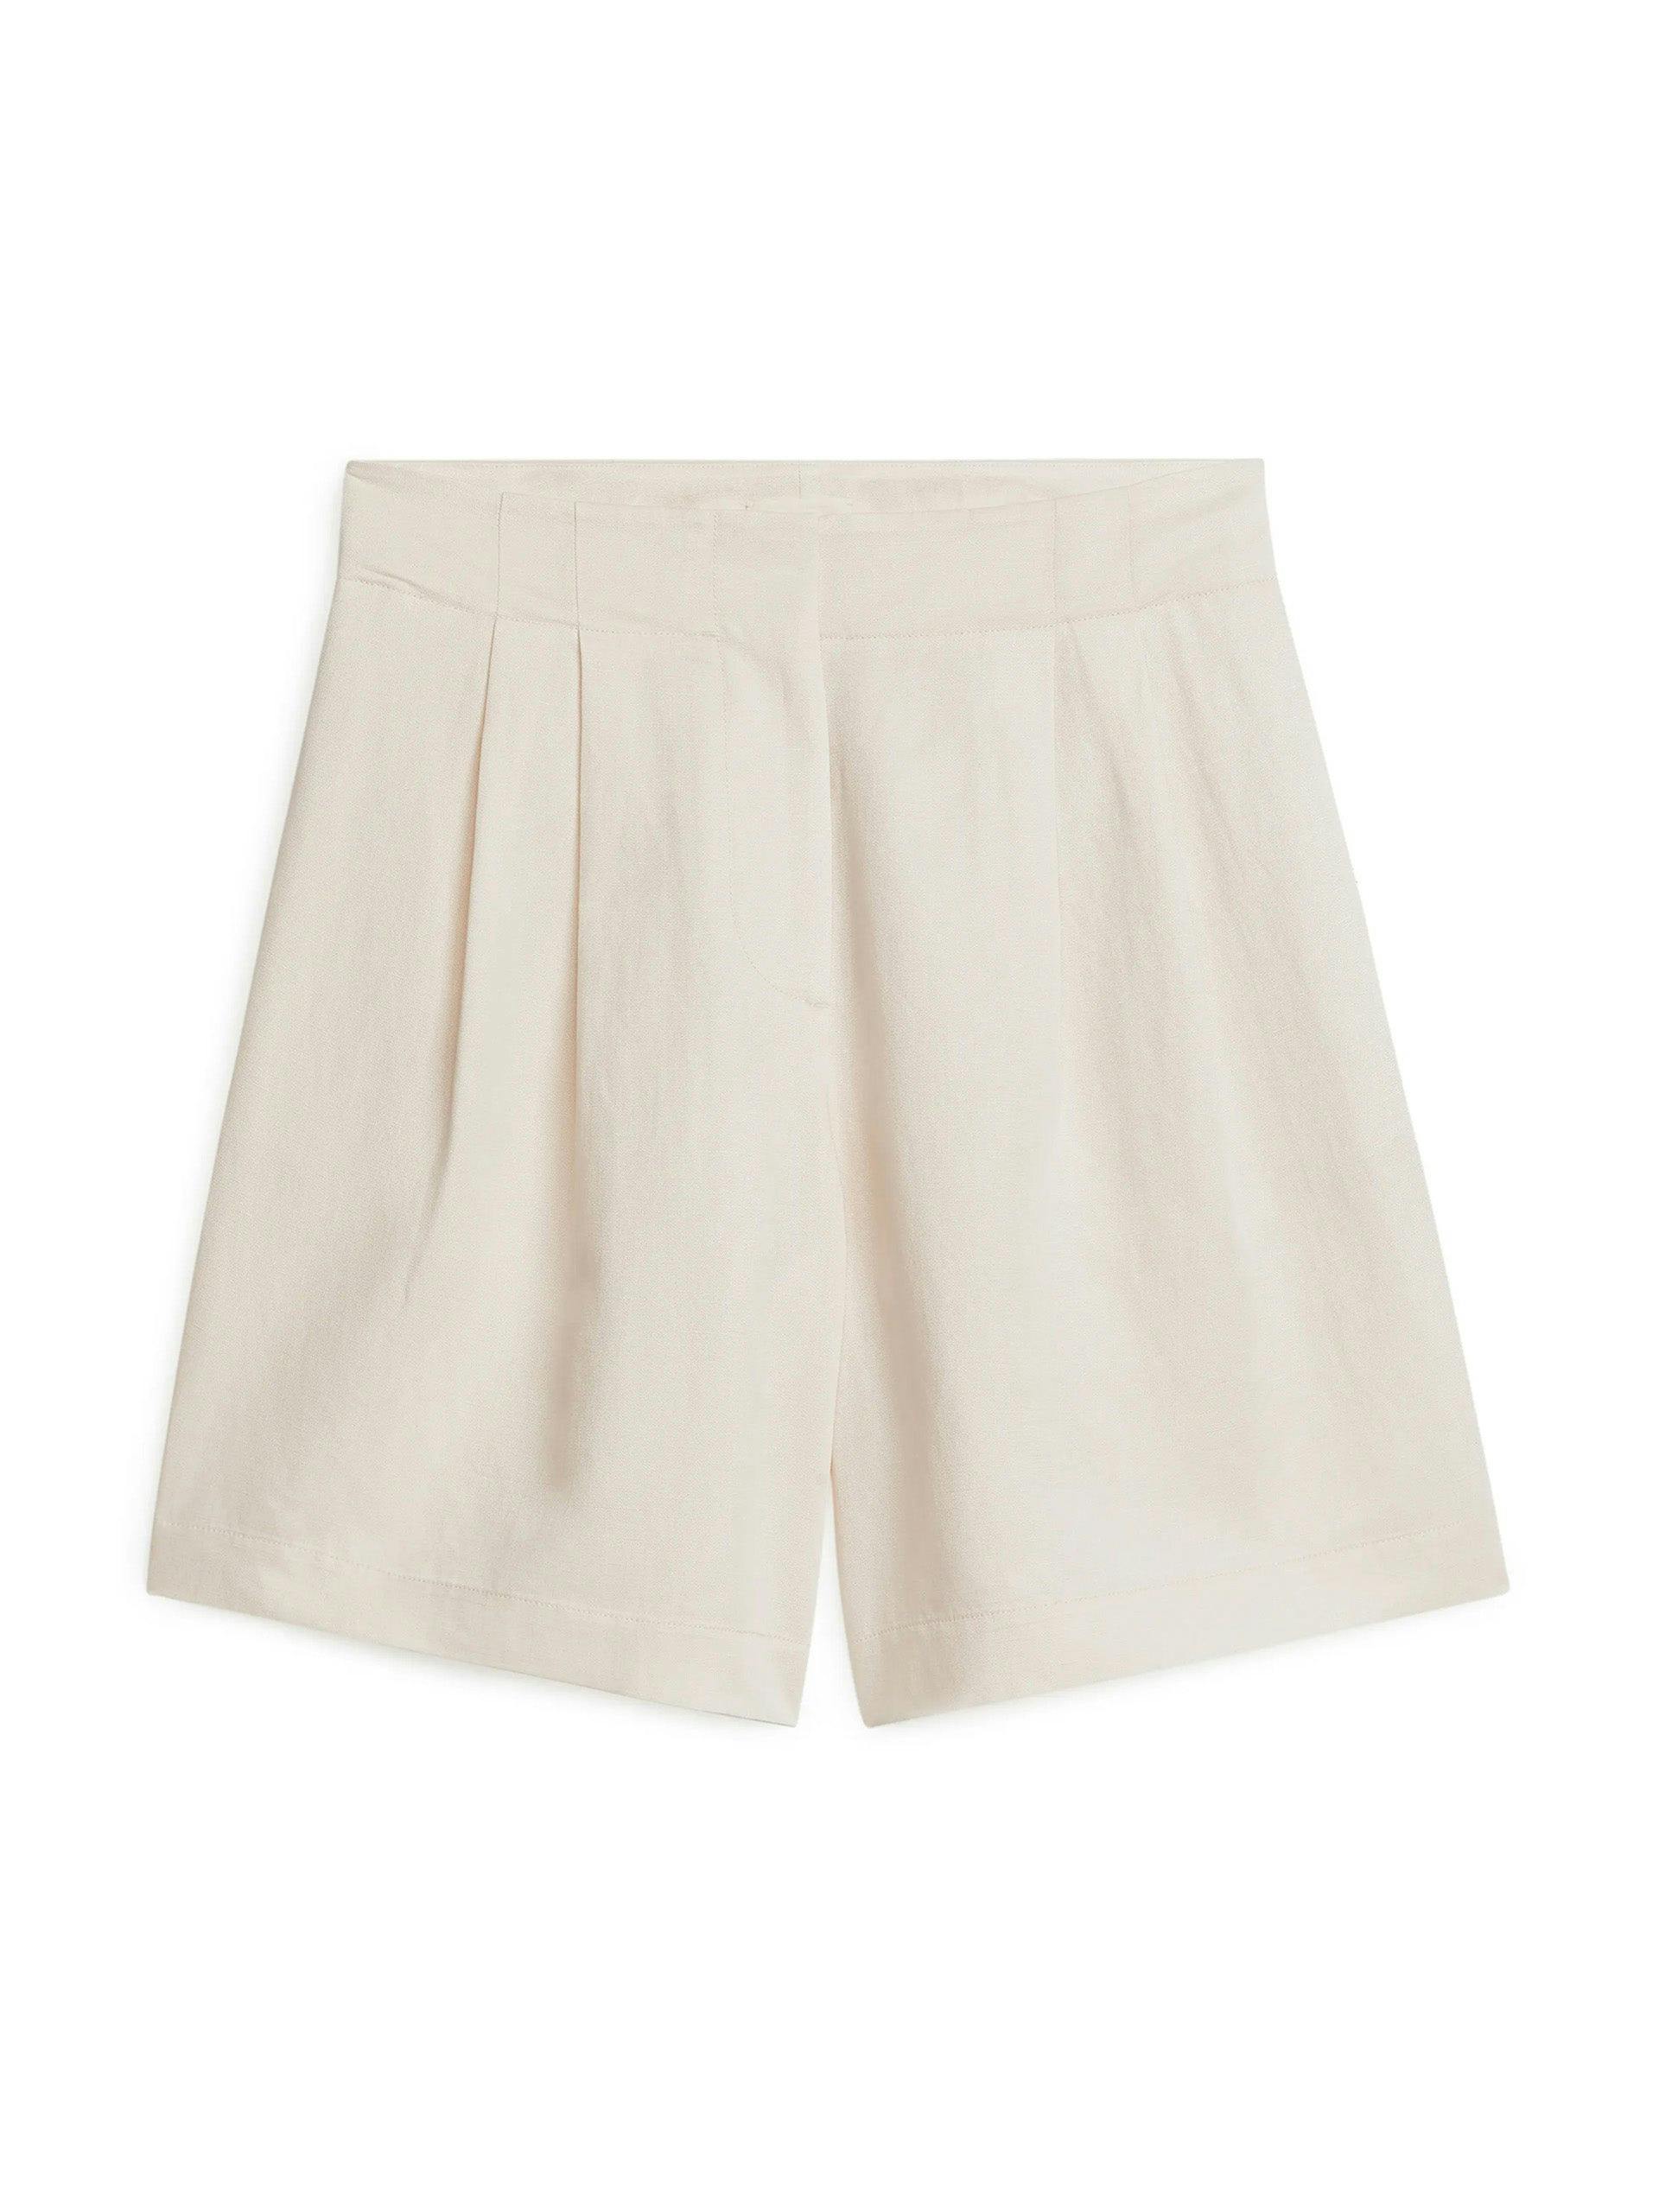 Cream oversized linen shorts